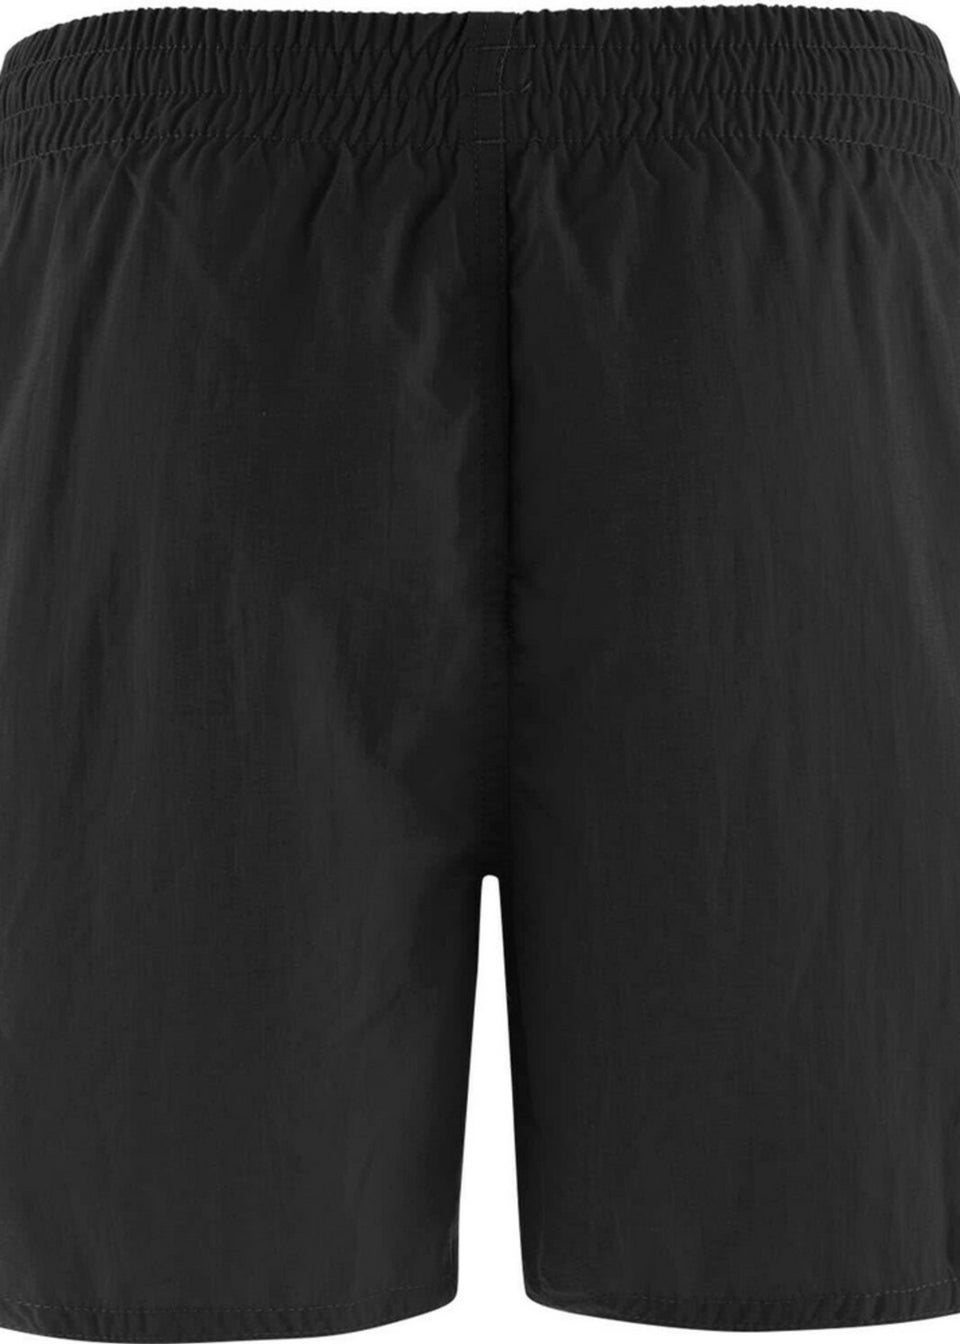 Speedo Boys Black Essential Swim Shorts (4-14yrs)